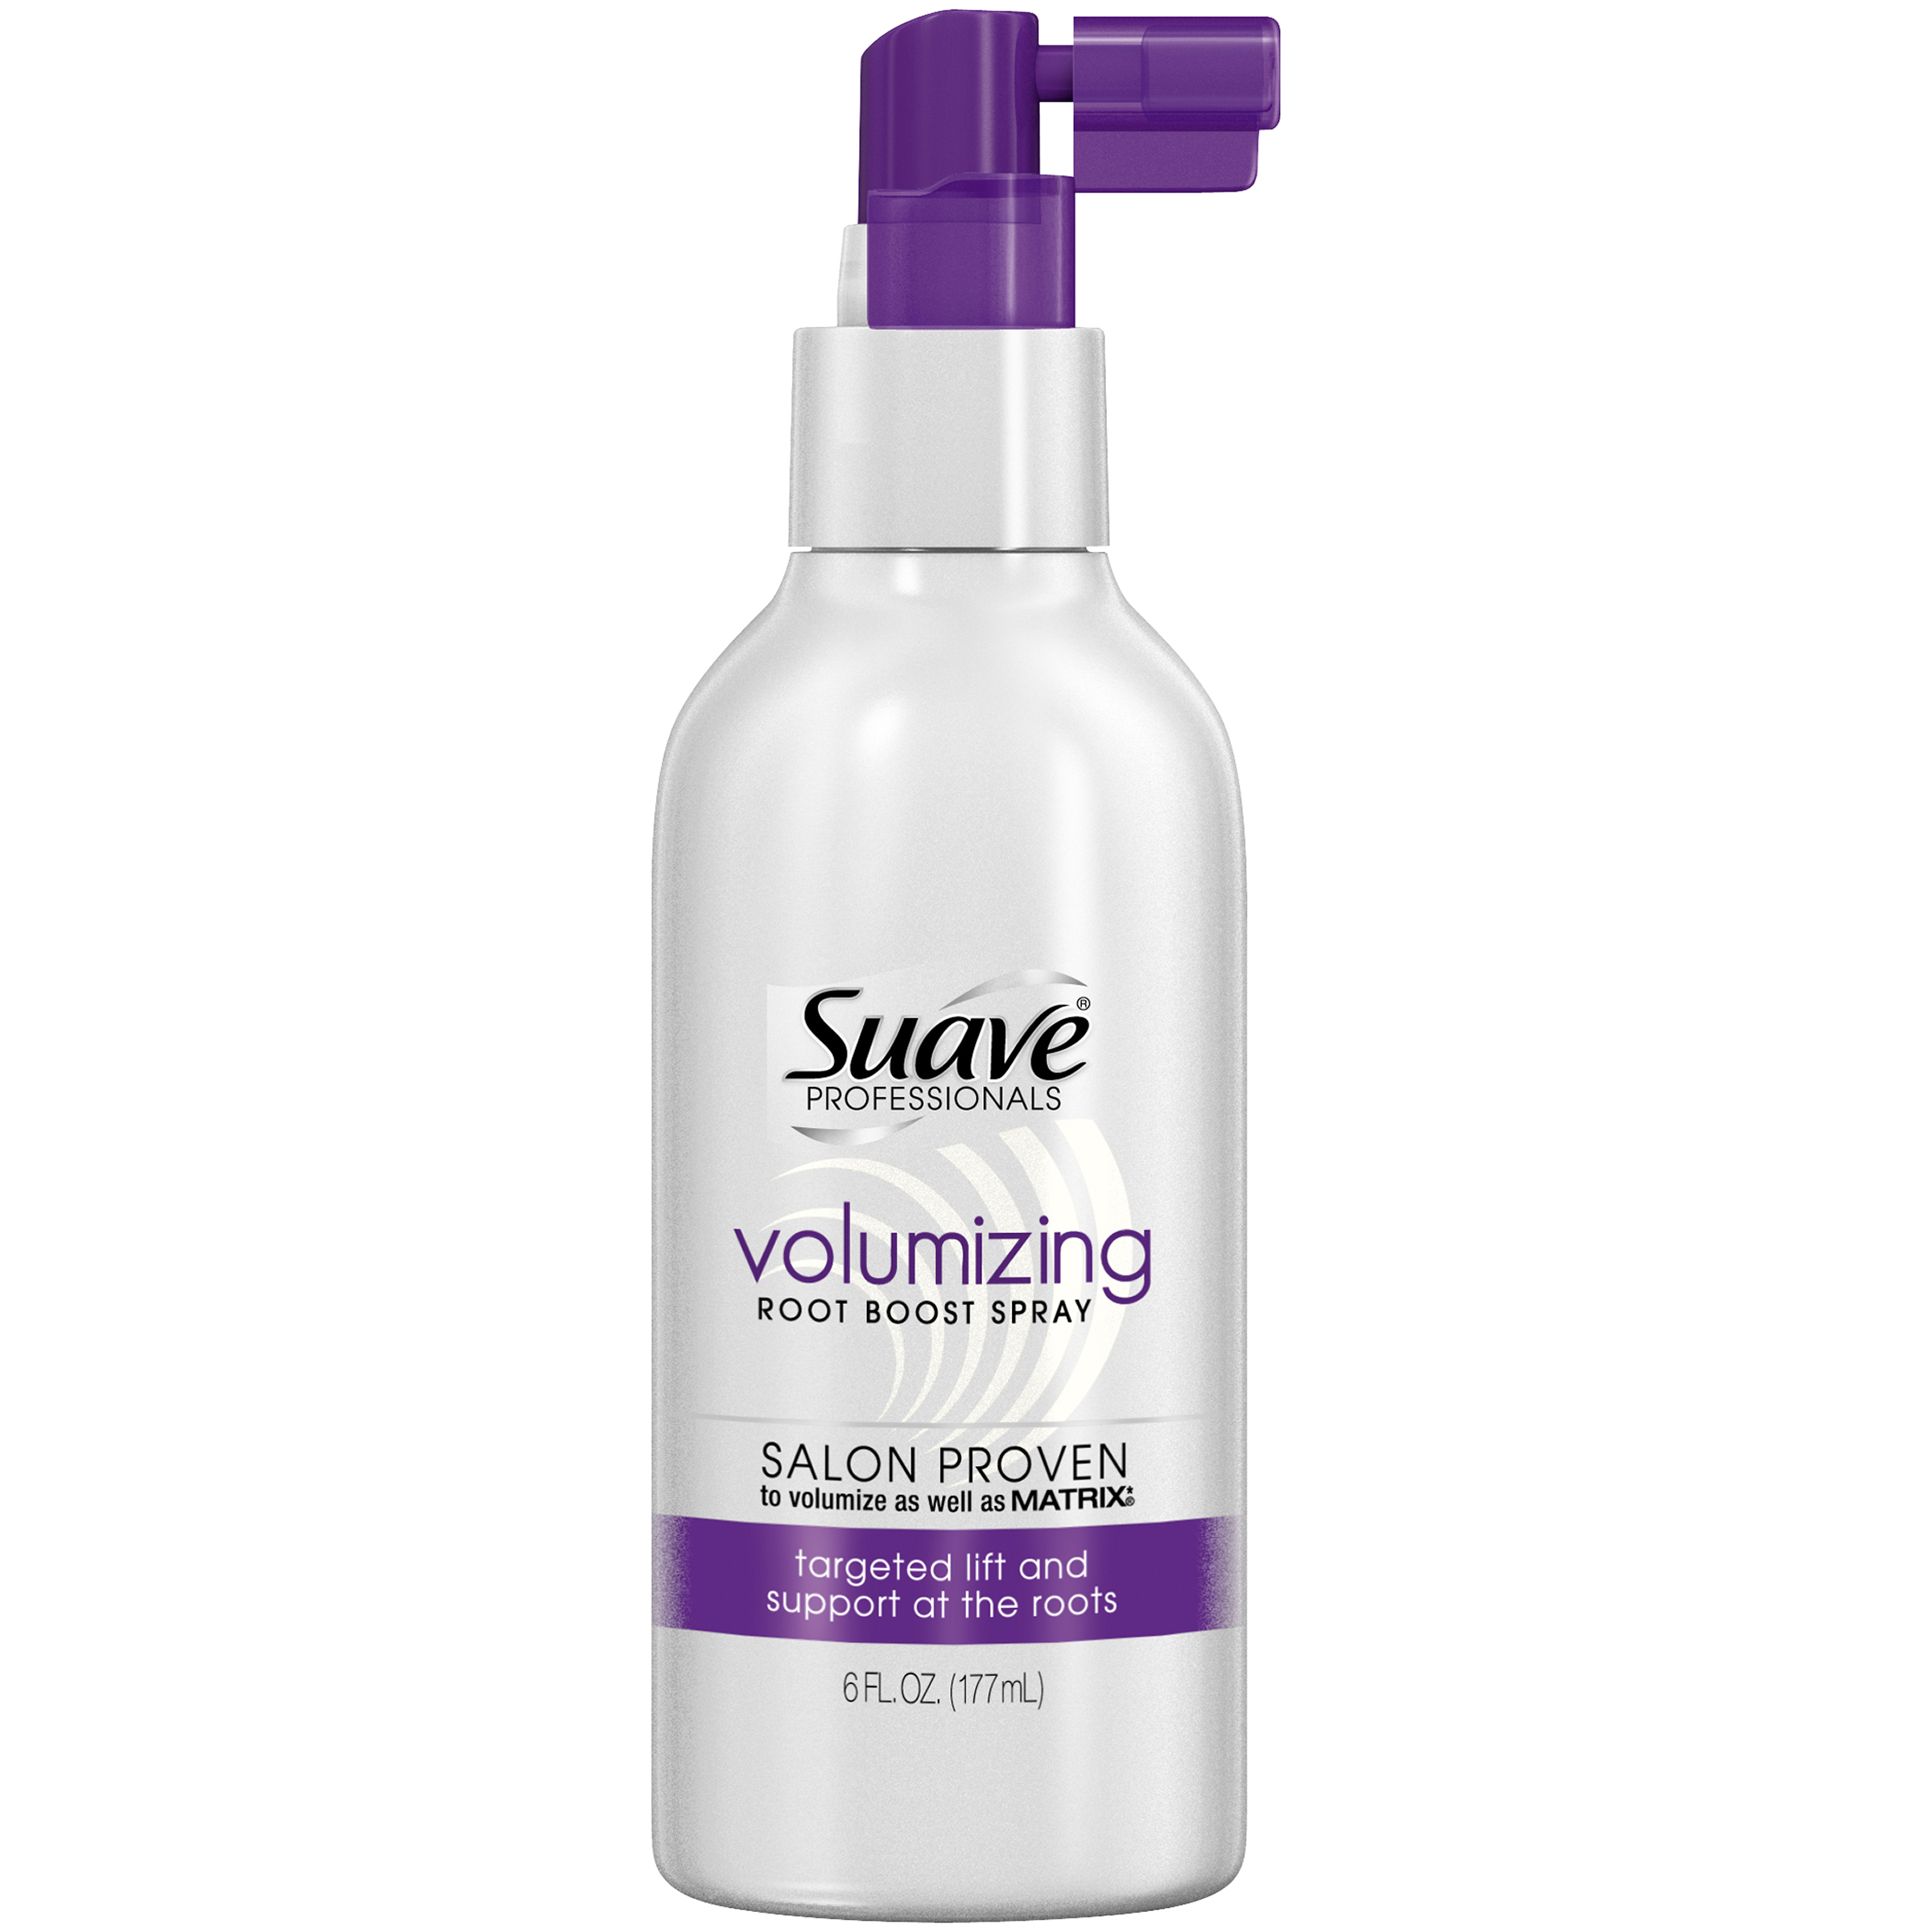 Suave Professionals Root Boost Spray, Volumizing 6 fl oz (177 ml)